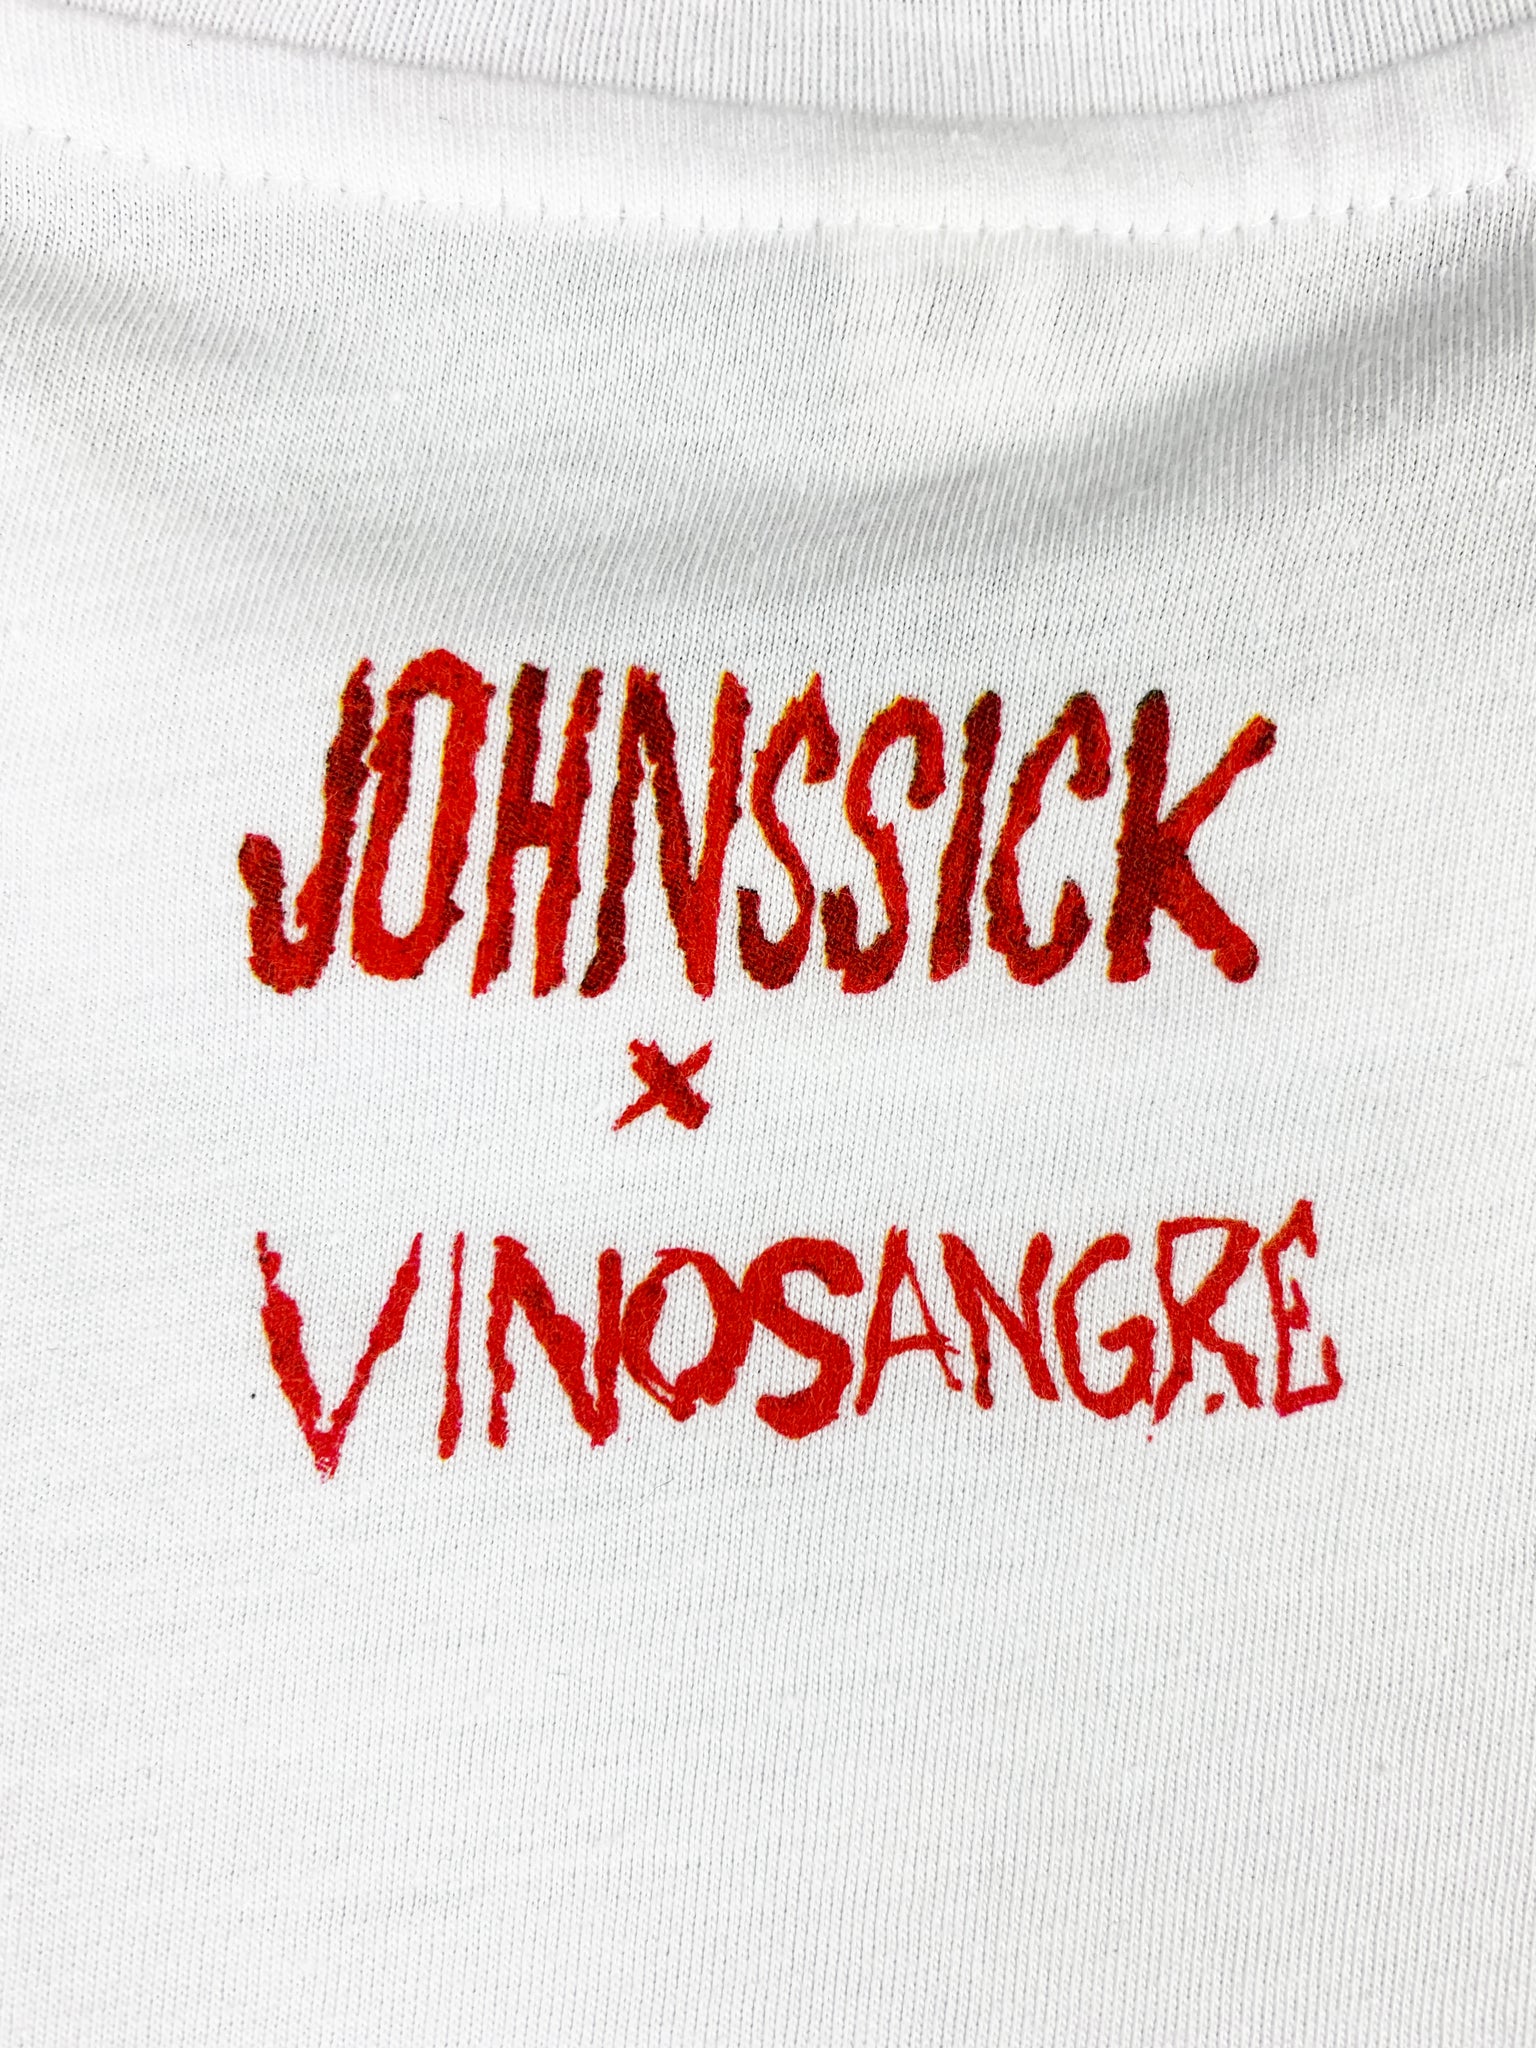 JOHNSSICK x VINOSANGRE